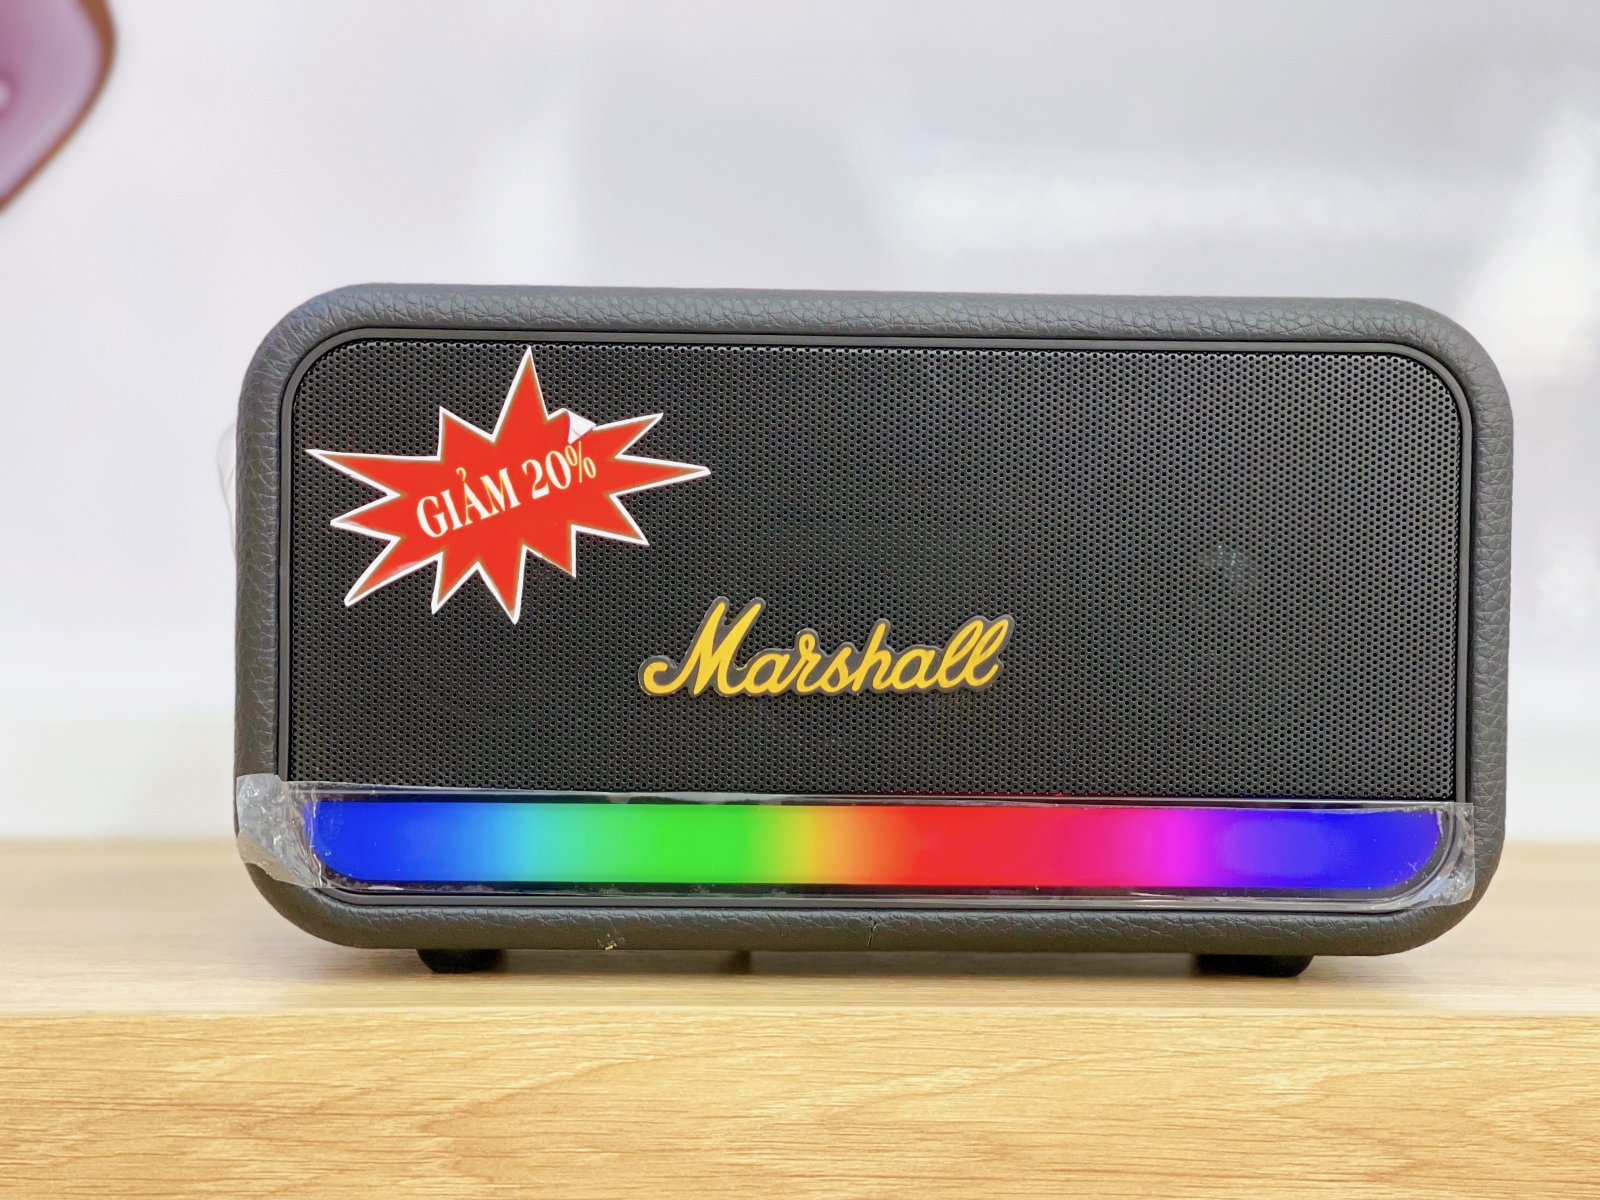 Marshall Speaker Pictures | Download Free Images on Unsplash